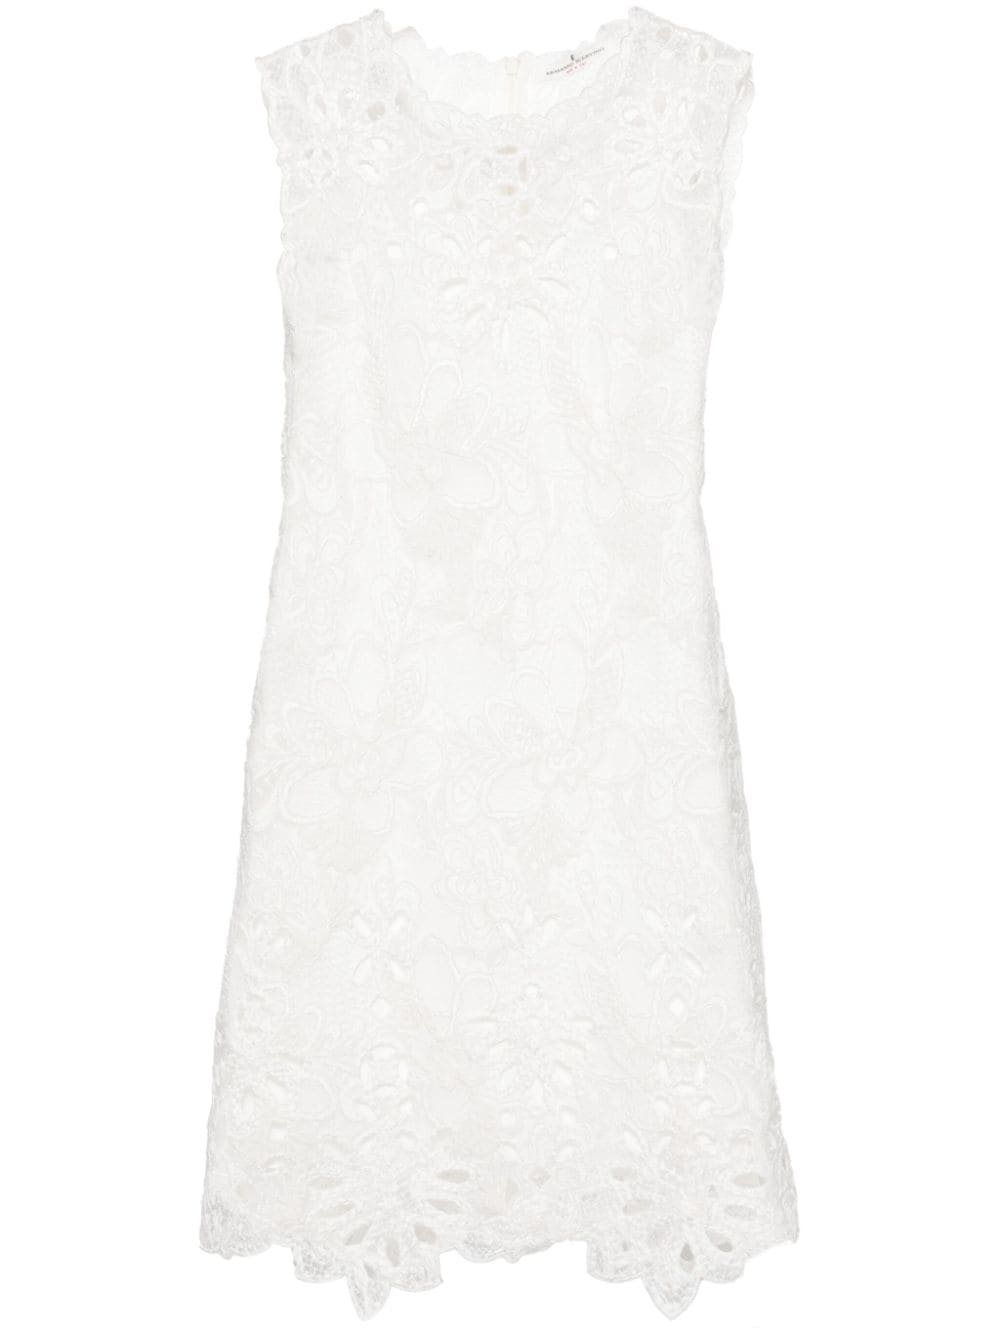 ERMANNO SCERVINO Elegant White Embroidered Lace Short Dress for Women